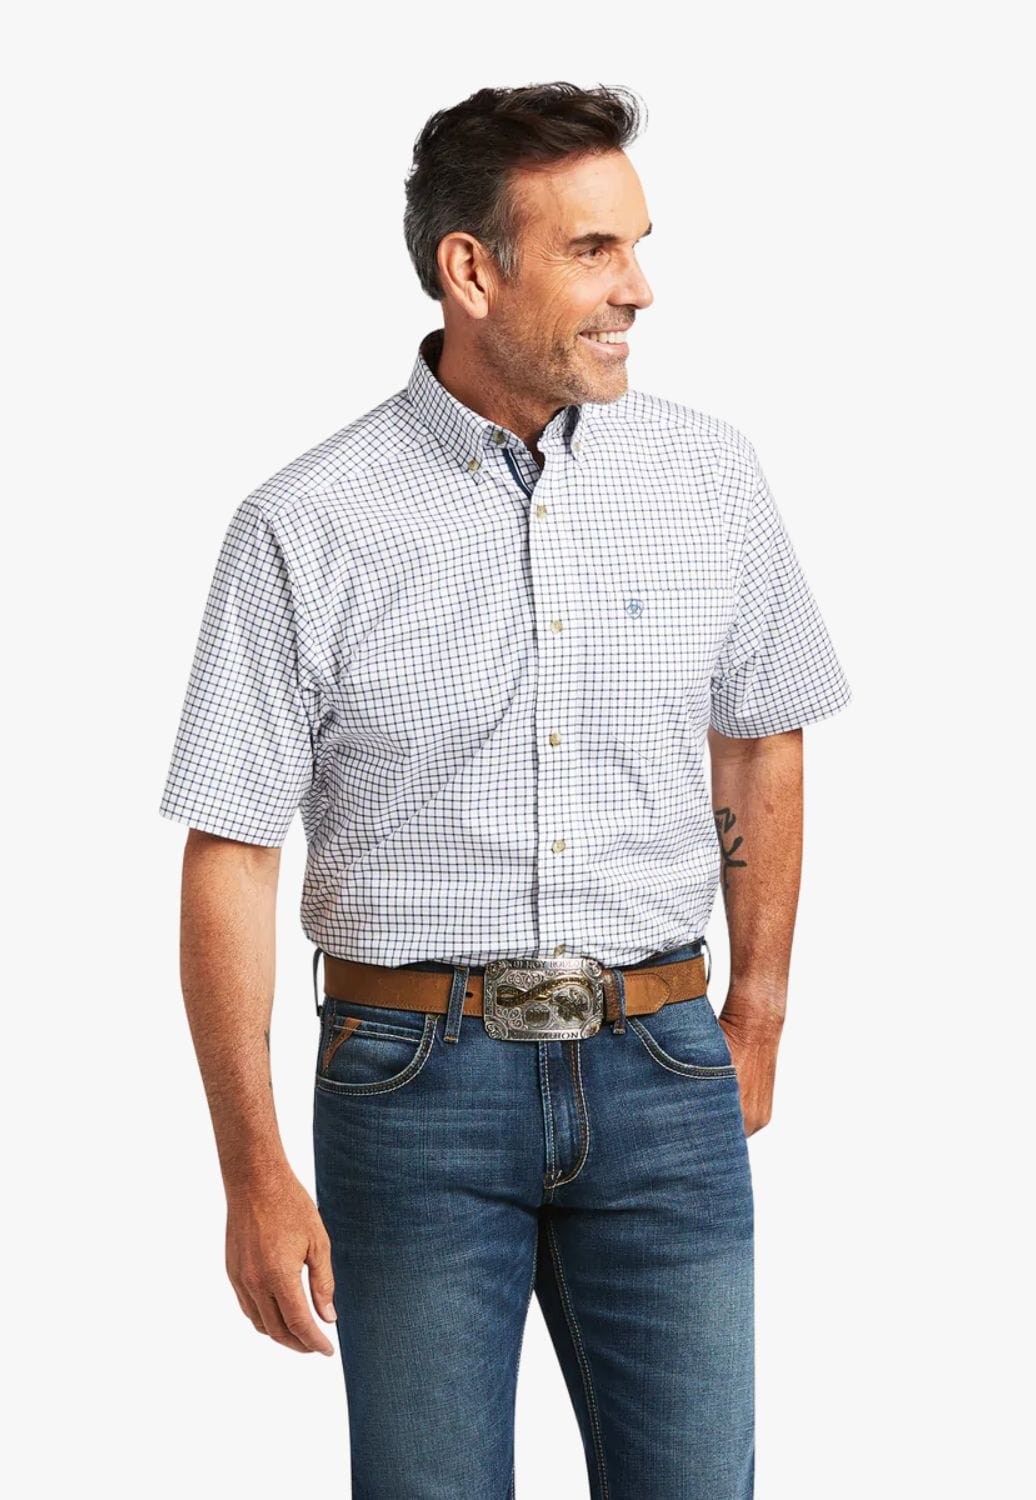 Ariat CLOTHING-Mens Short Sleeve Shirts Ariat Mens Pro Series Taha Stretch Short Sleeve Shirt